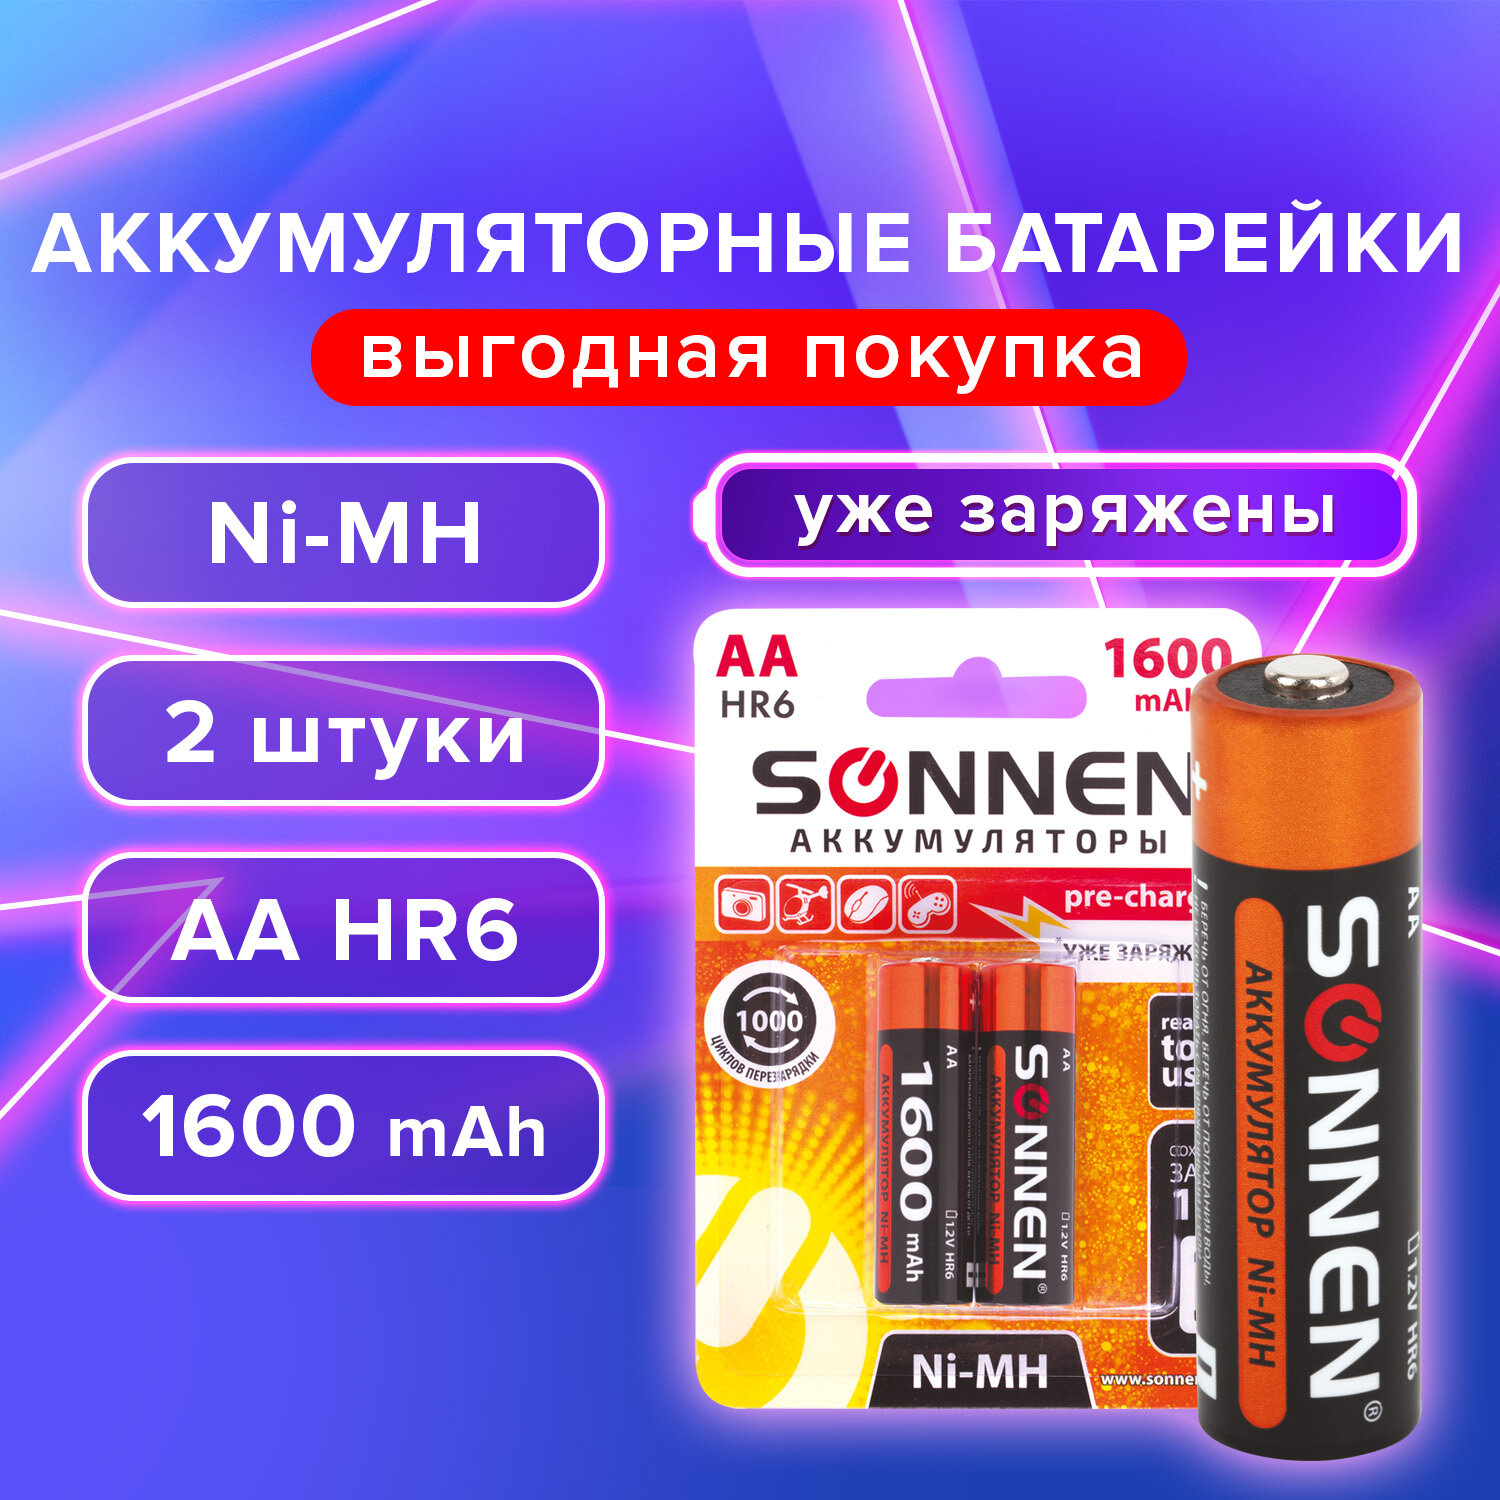 Sonnen Батарейки аккумуляторные 2 шт. SONNEN 454233, АА (HR6), Ni-Mh, 1600 mAh, в блистере, комплект 2 уп.